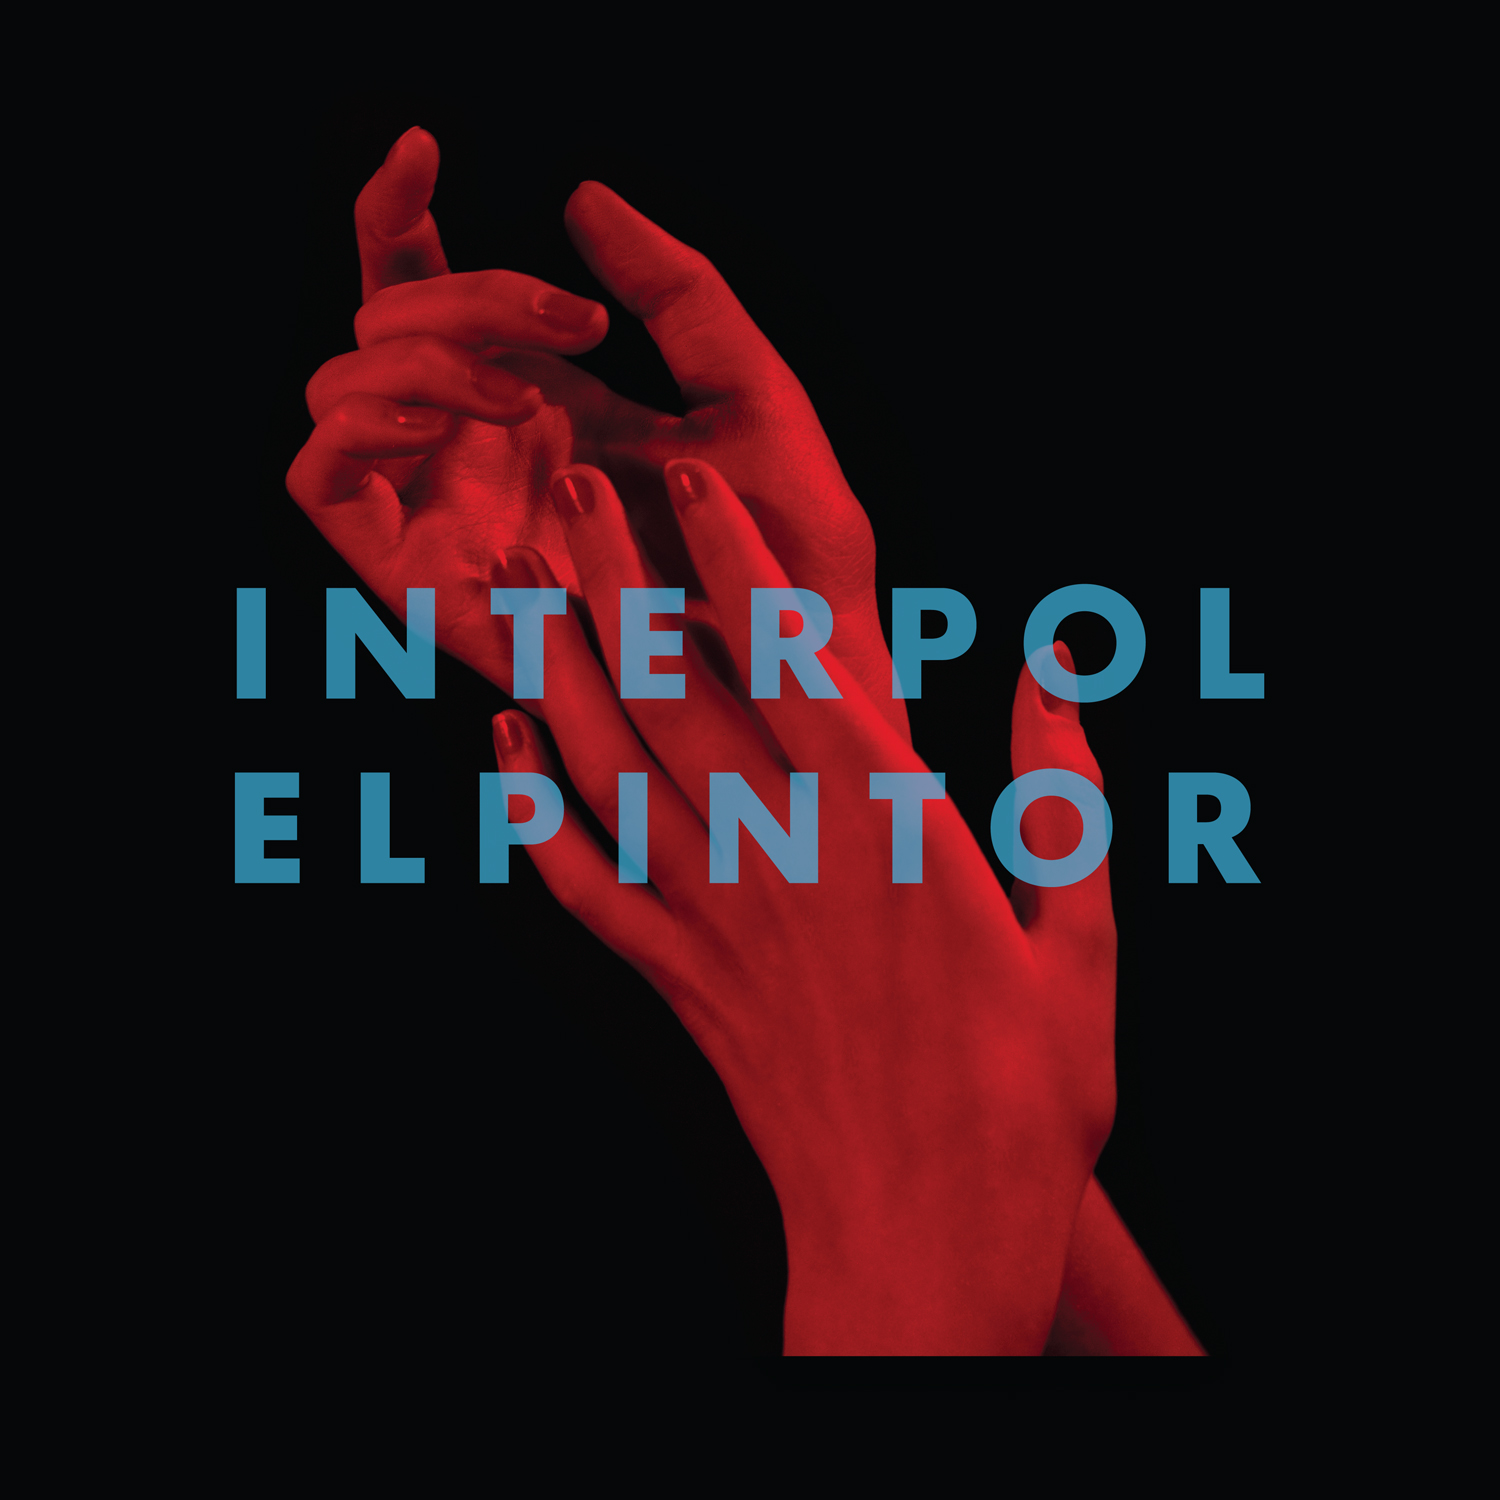 Interpol “El Pintor” Album Review